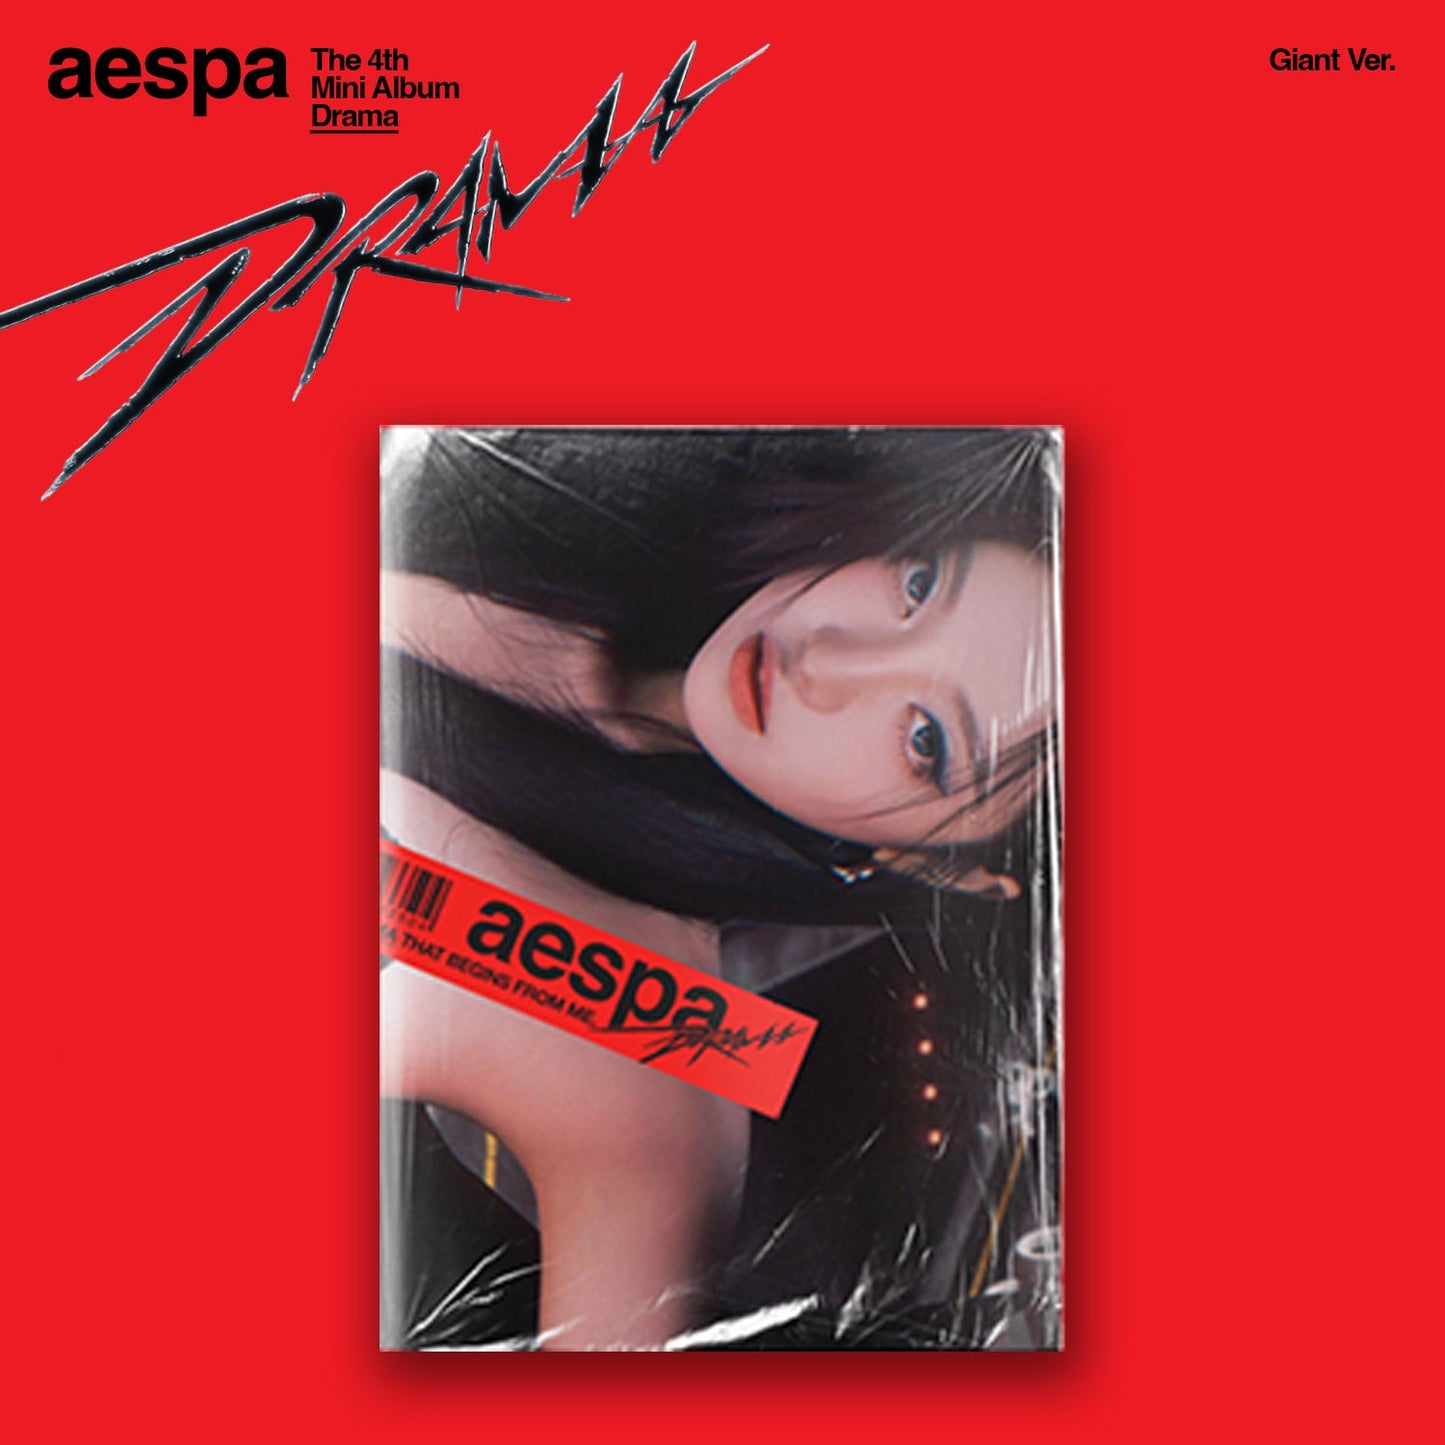 AESPA 4TH MINI ALBUM 'DRAMA' (GIANT) NINGNING VERSION COVER